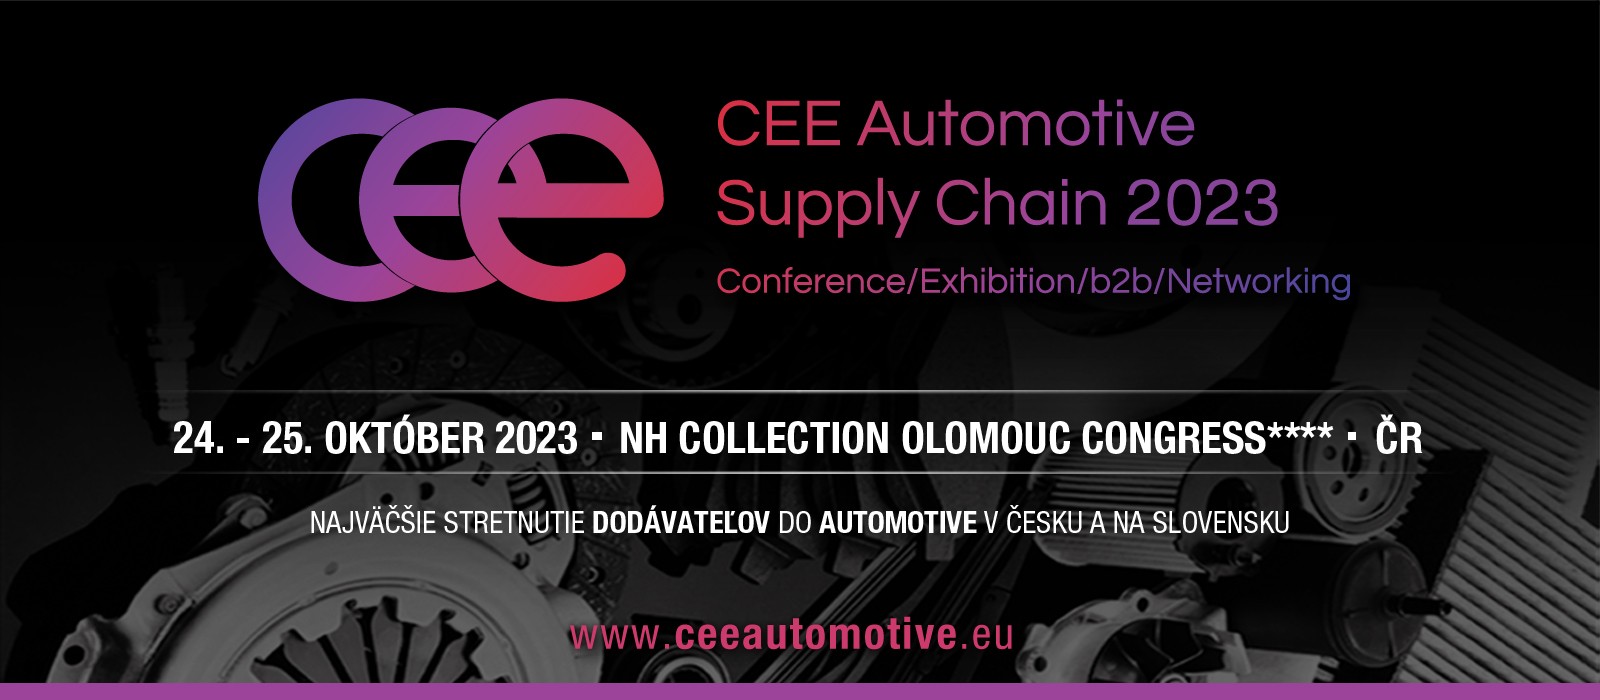 CEE Automotive Supply Chain 2023